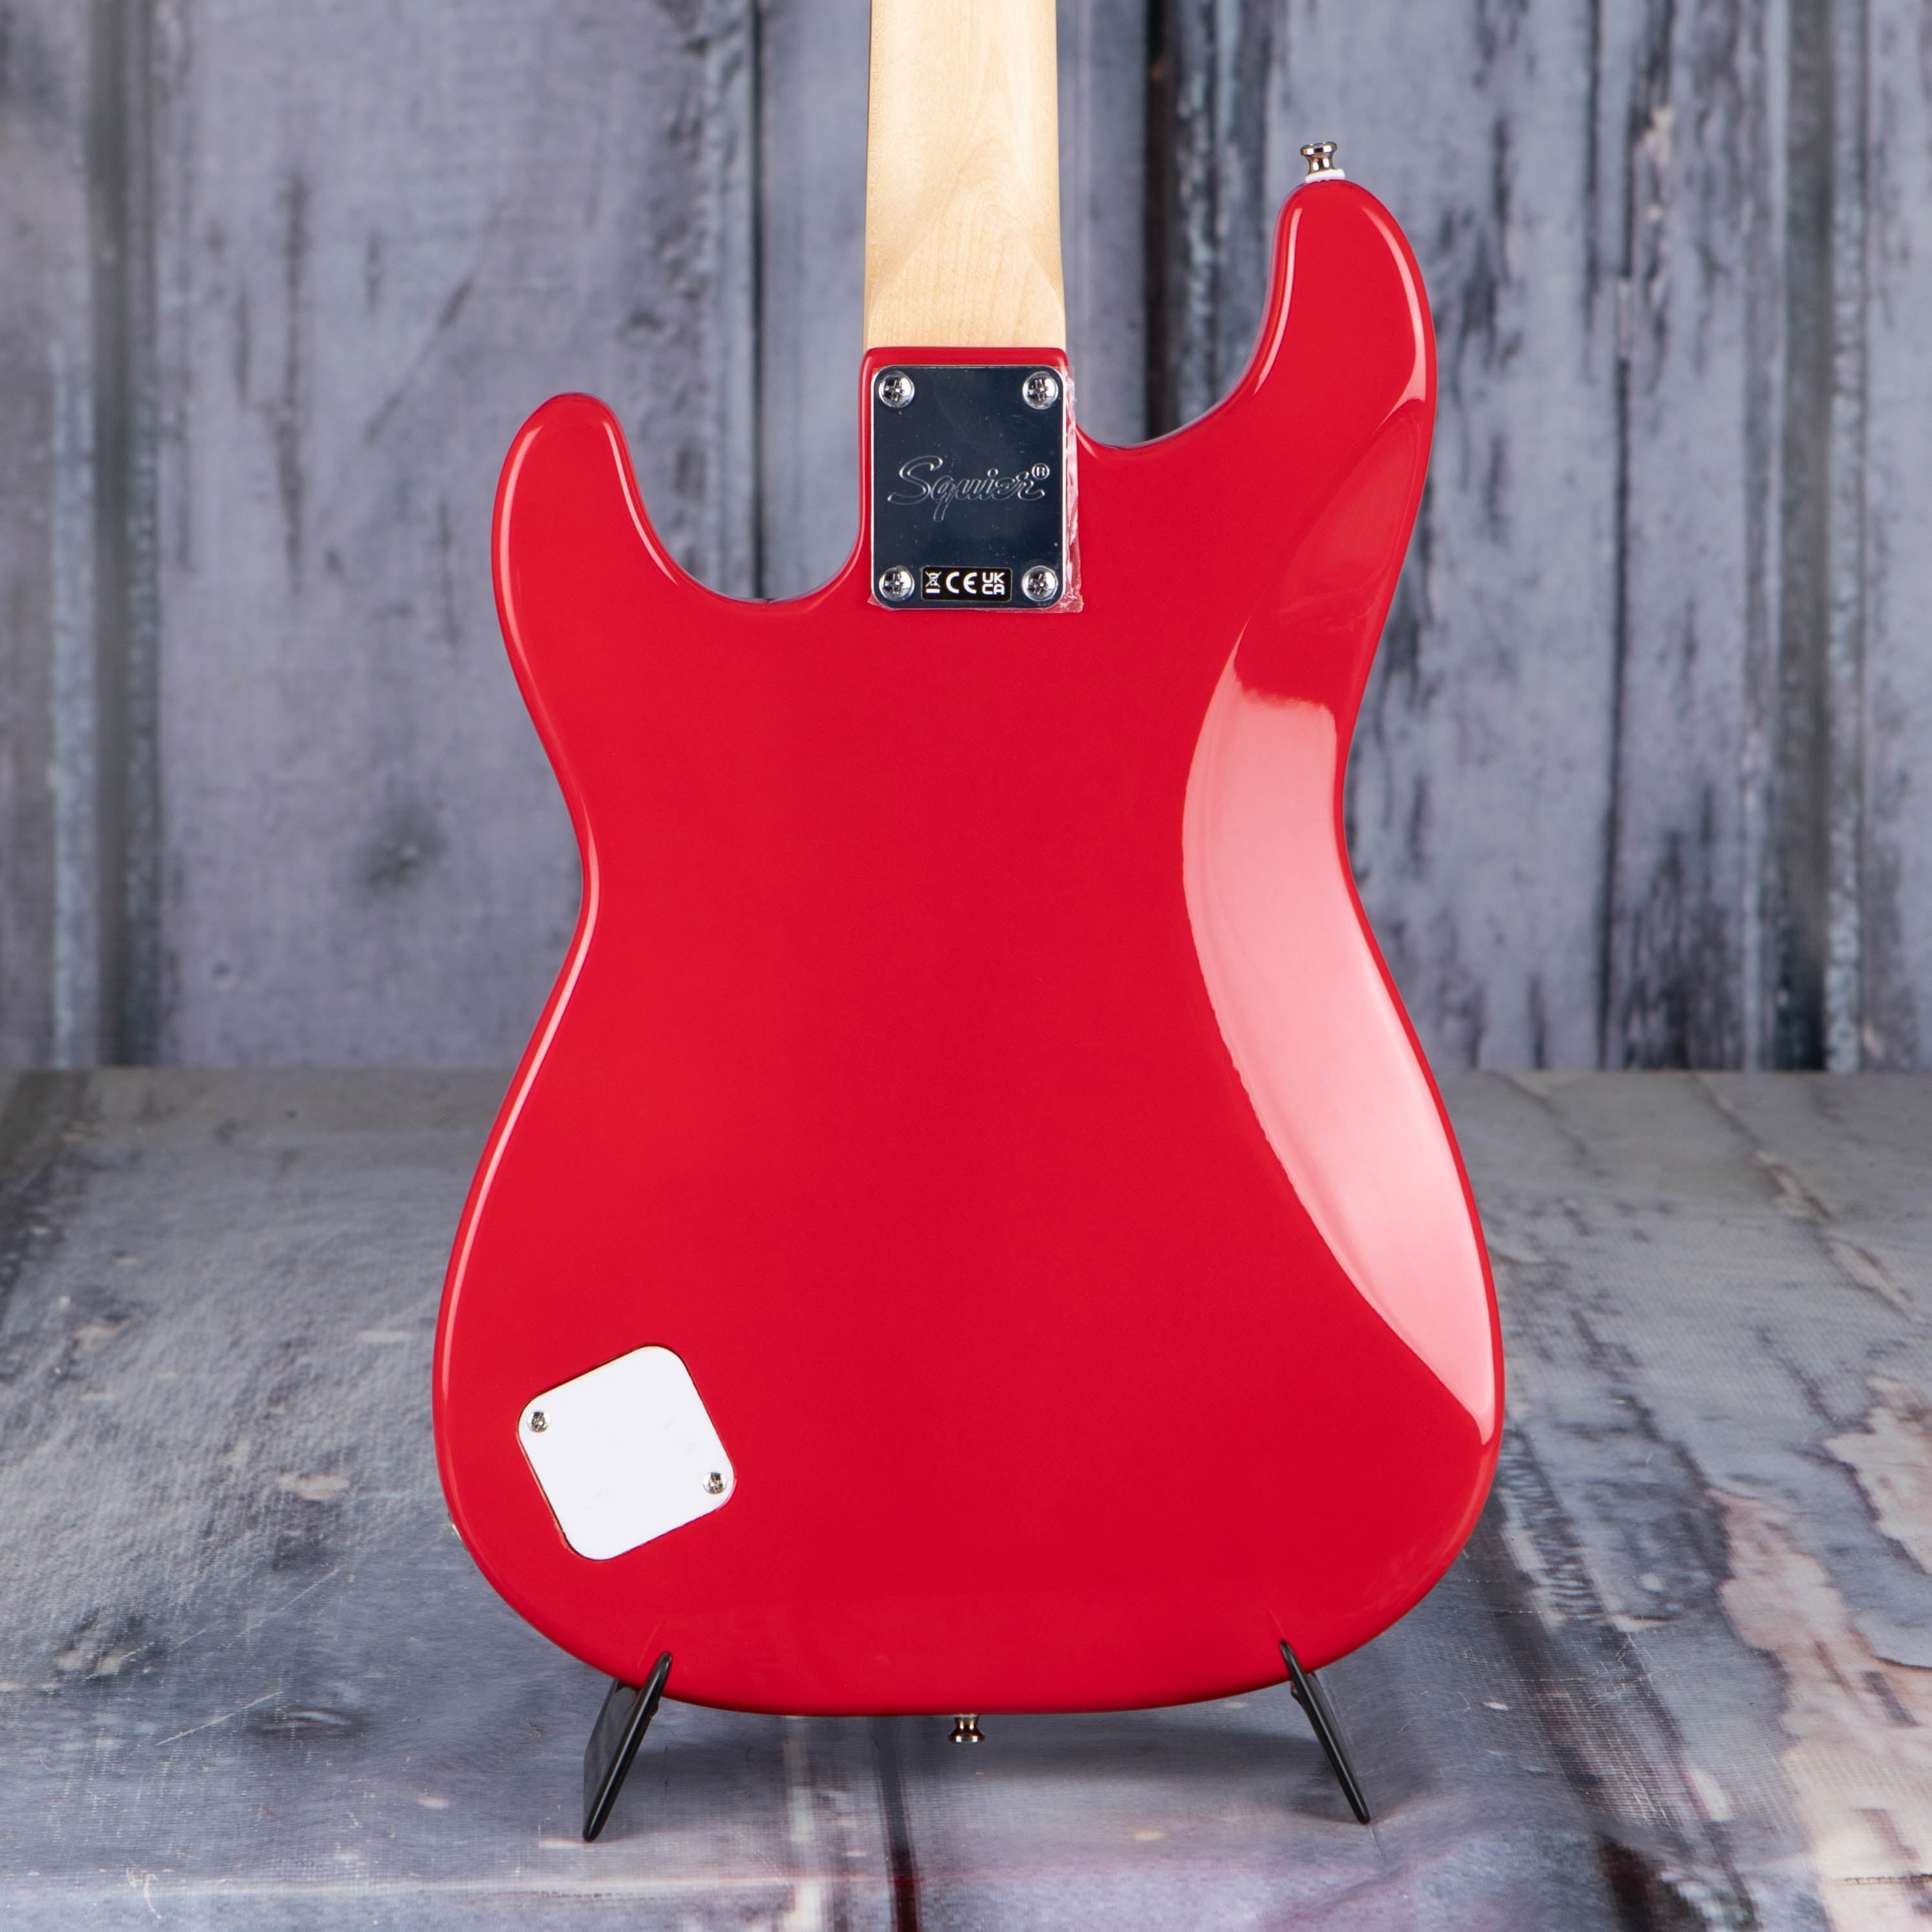 Squier Mini Stratocaster Electric Guitar, Dakota Red, back closeup